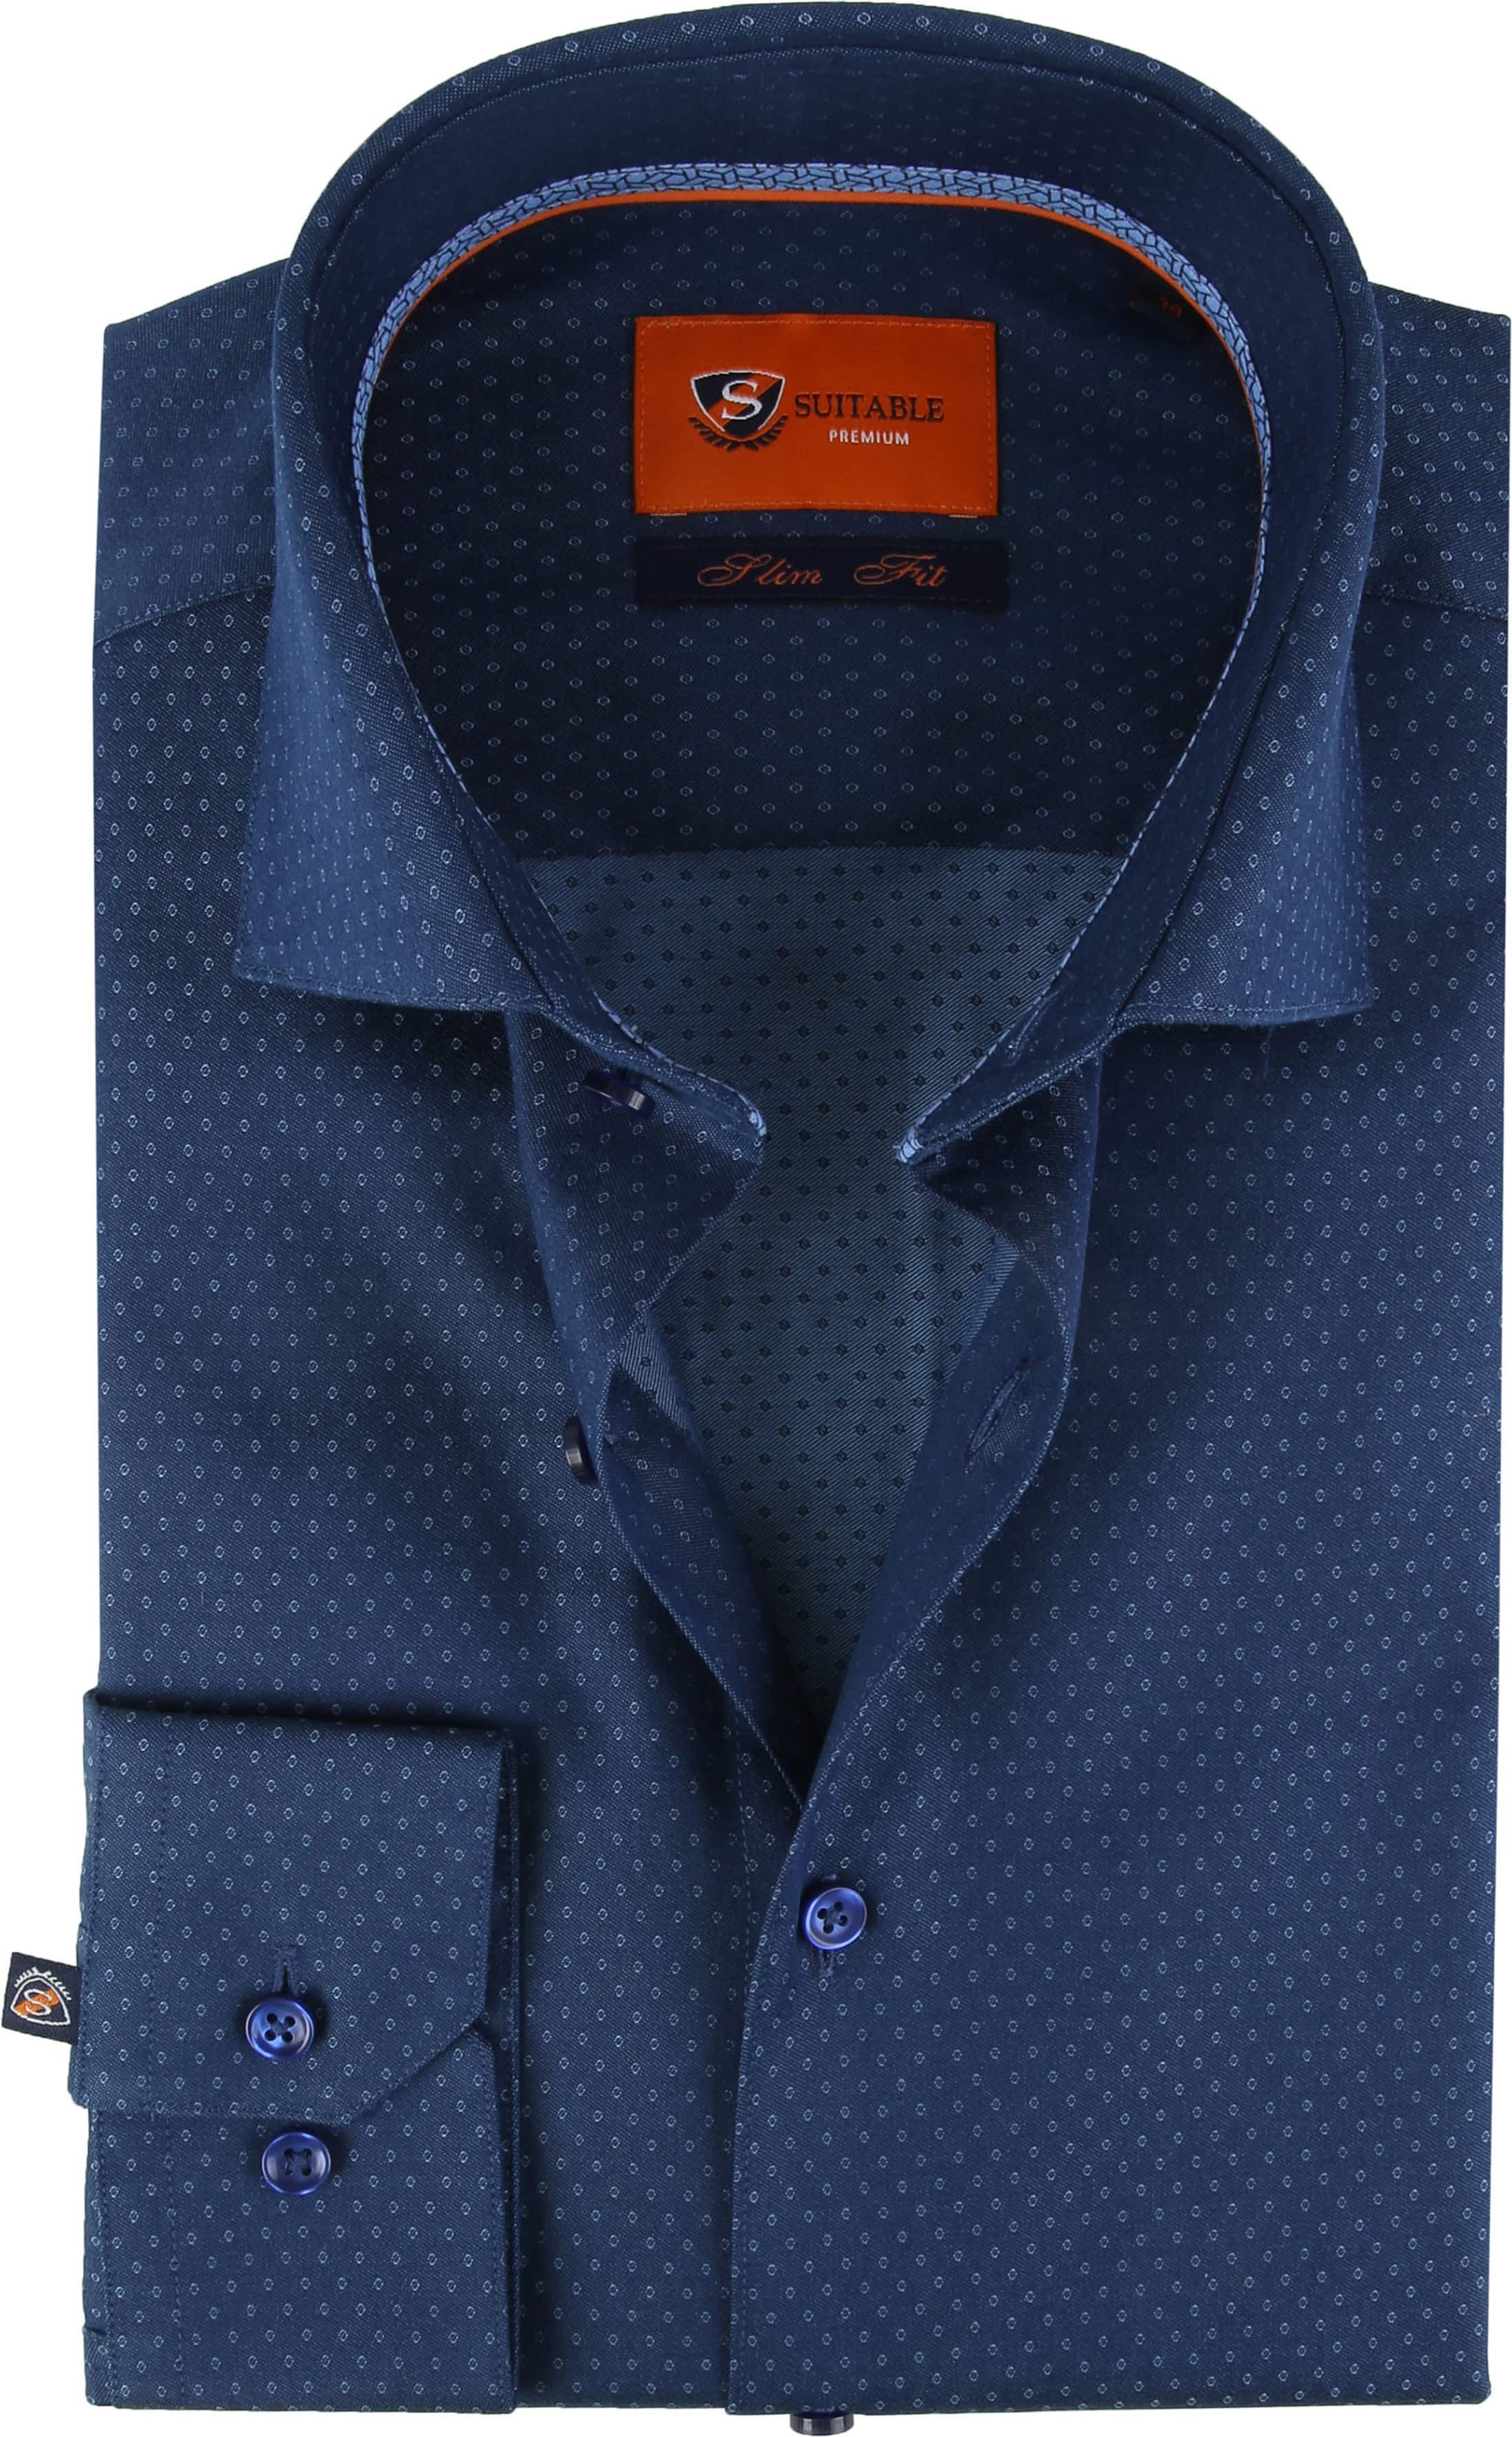 Suitable Shirt SF Dessin Navy Dark Blue Blue size 15